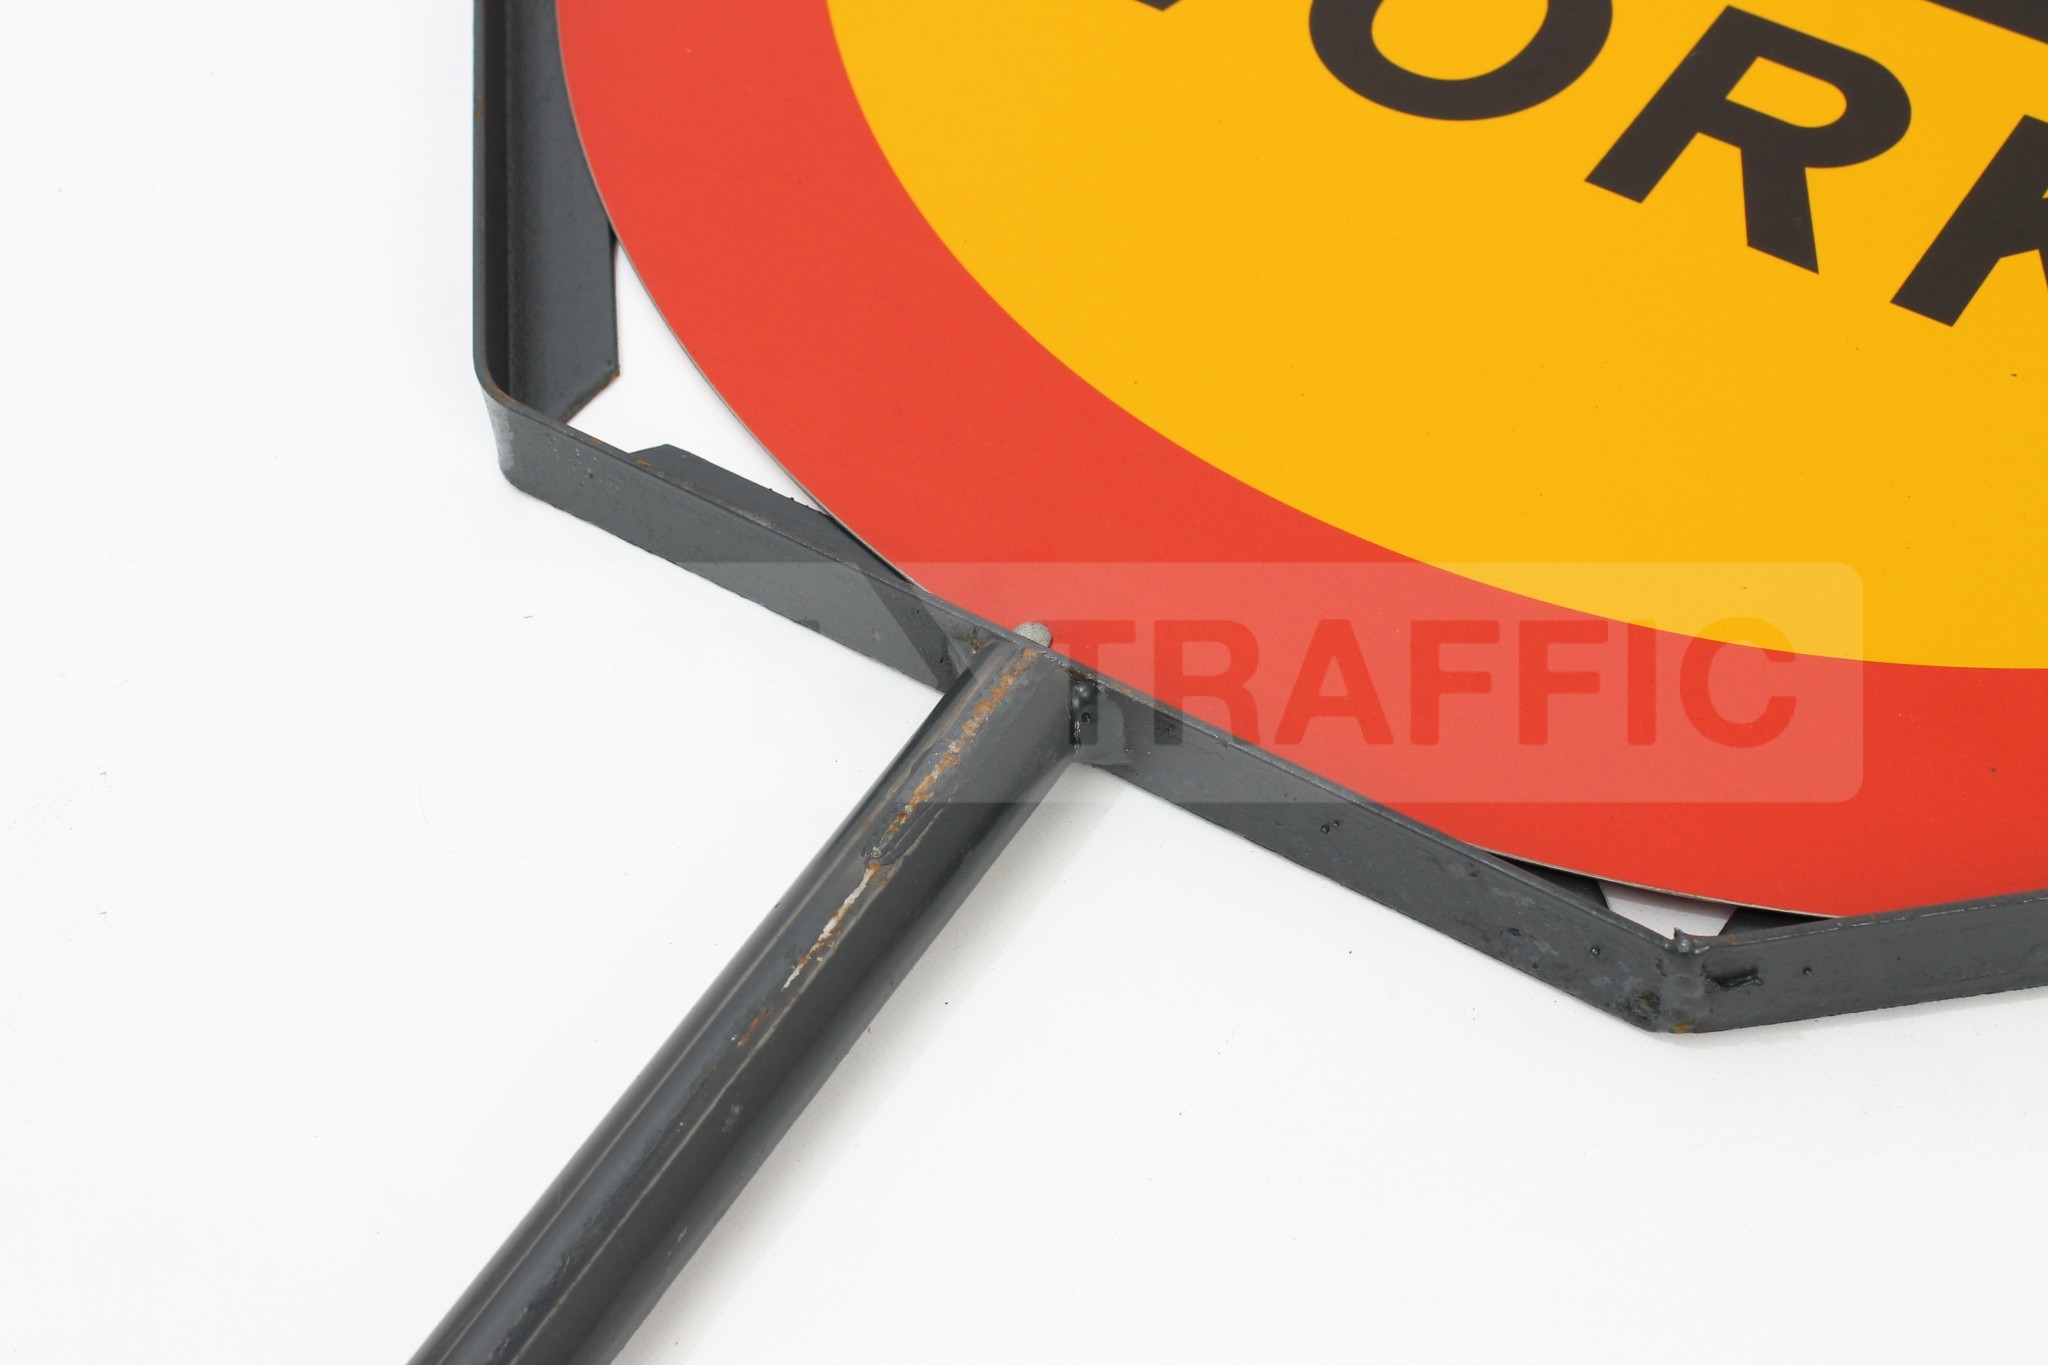 stop-works-sign-steel-rigid-stem-closeup